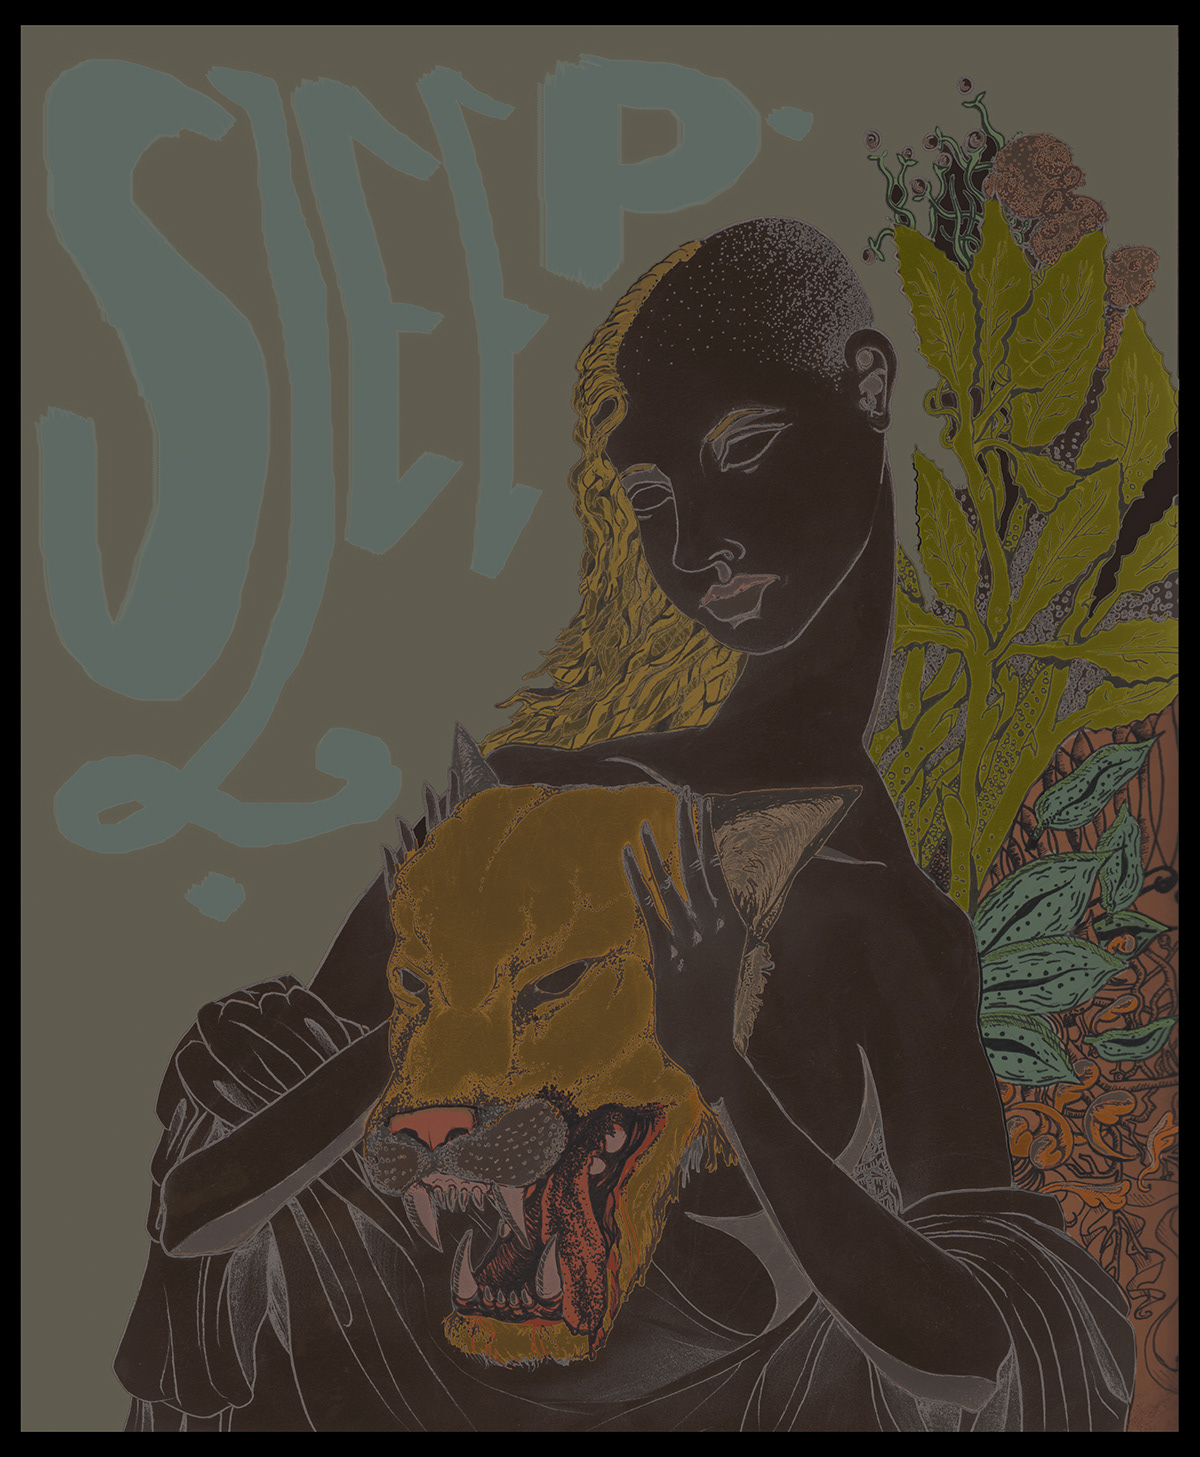 sleep sludge metal poster art Gig Art digital illustration cougar decapitated witchy woman